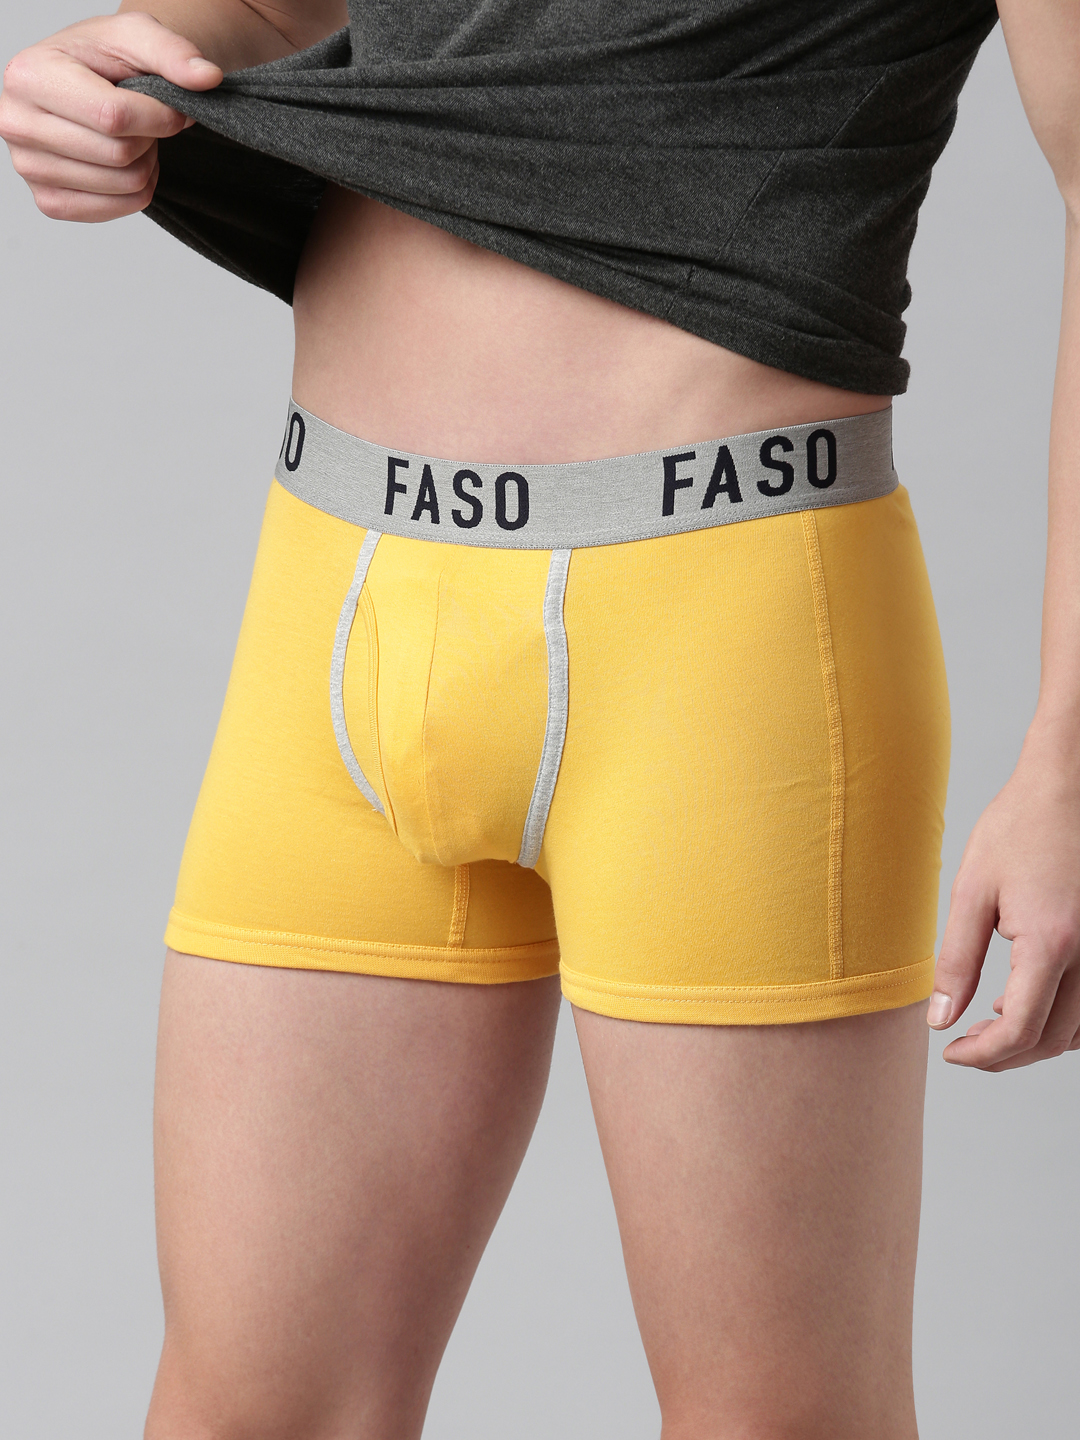 Buy FASO Mens Cotton Trunks